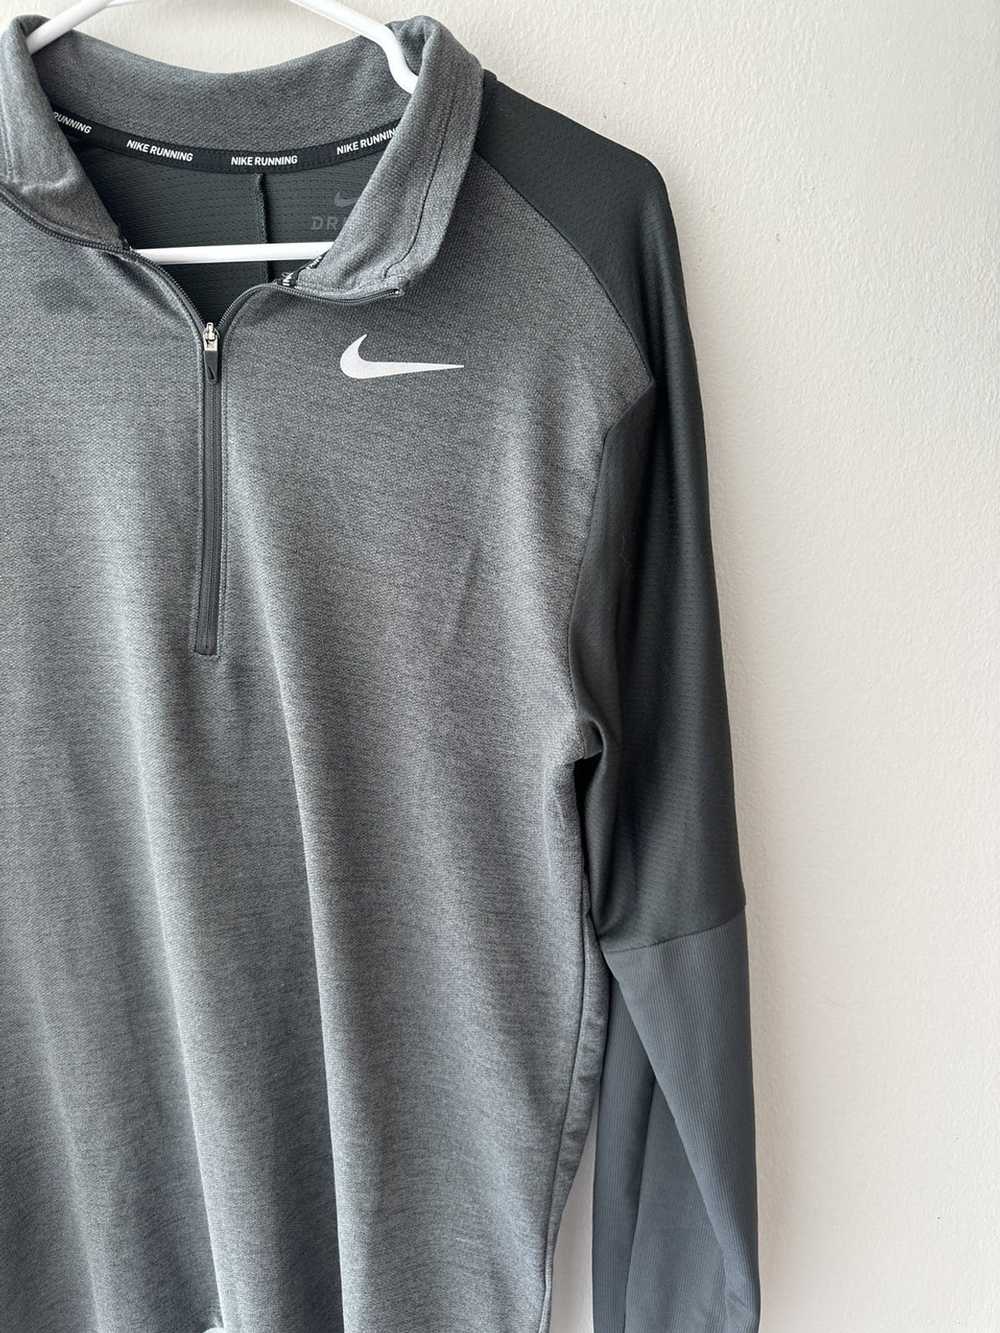 Nike Nike running sweatshirt - image 2